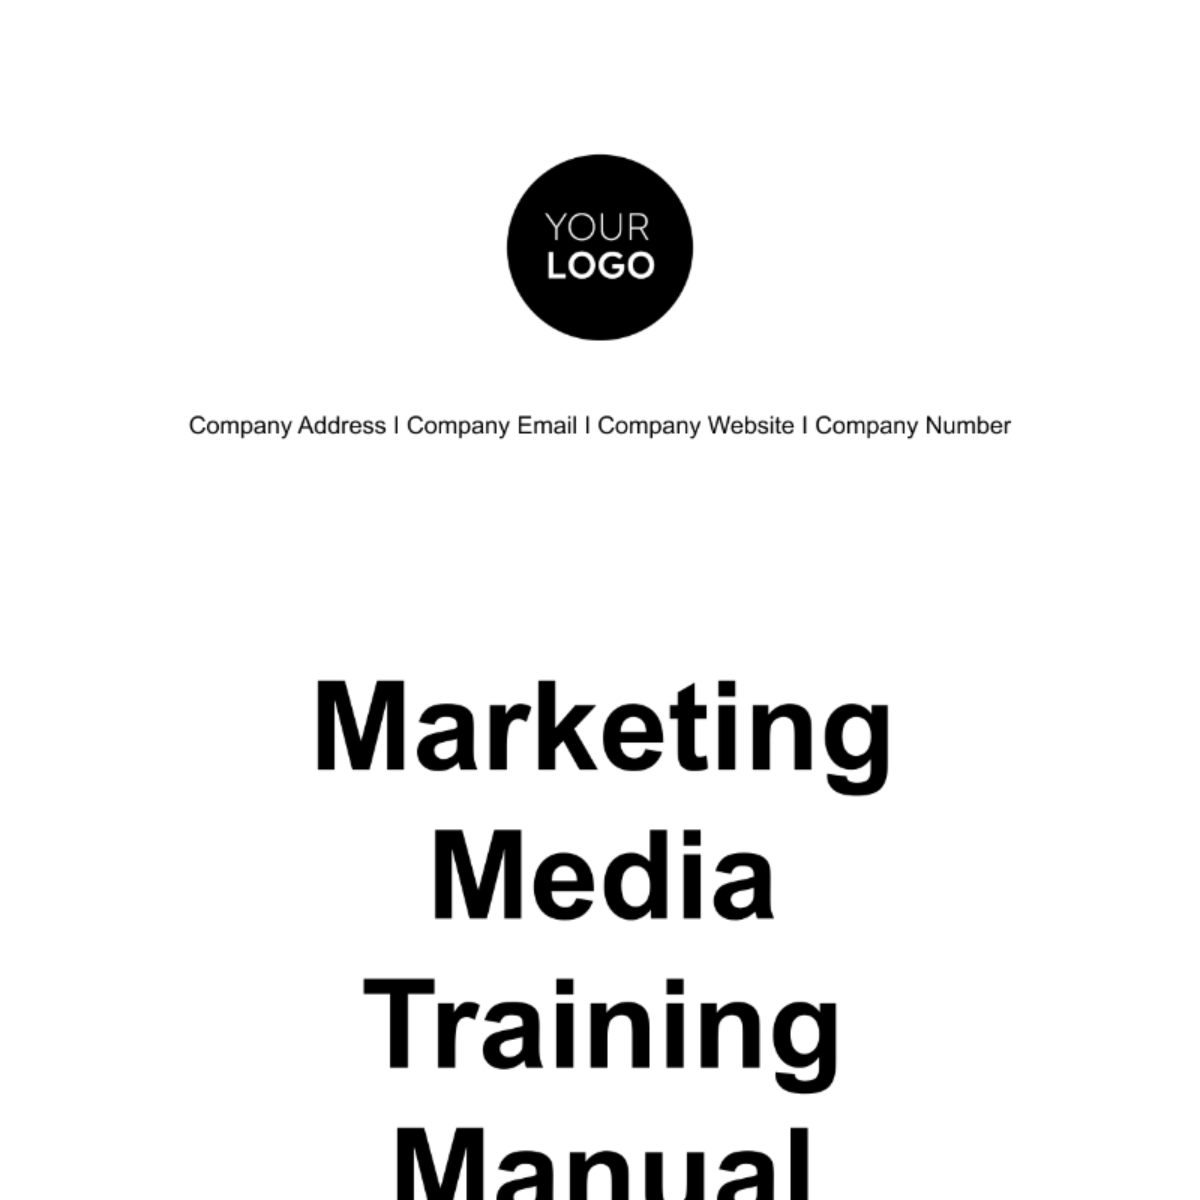 Marketing Media Training Manual Template